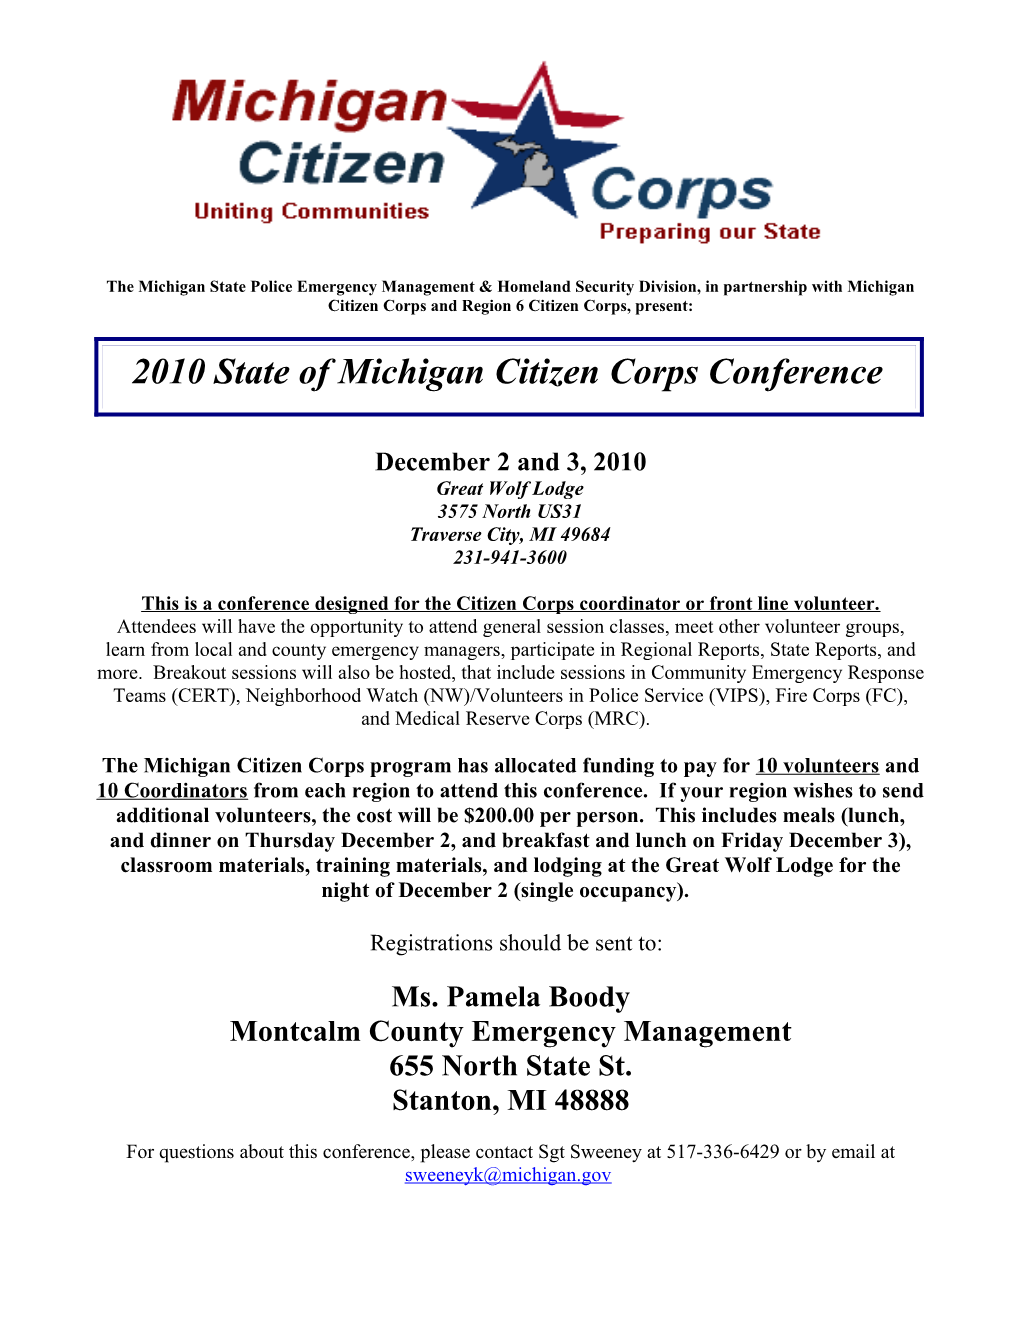 Michigan Citizen Corps Conference